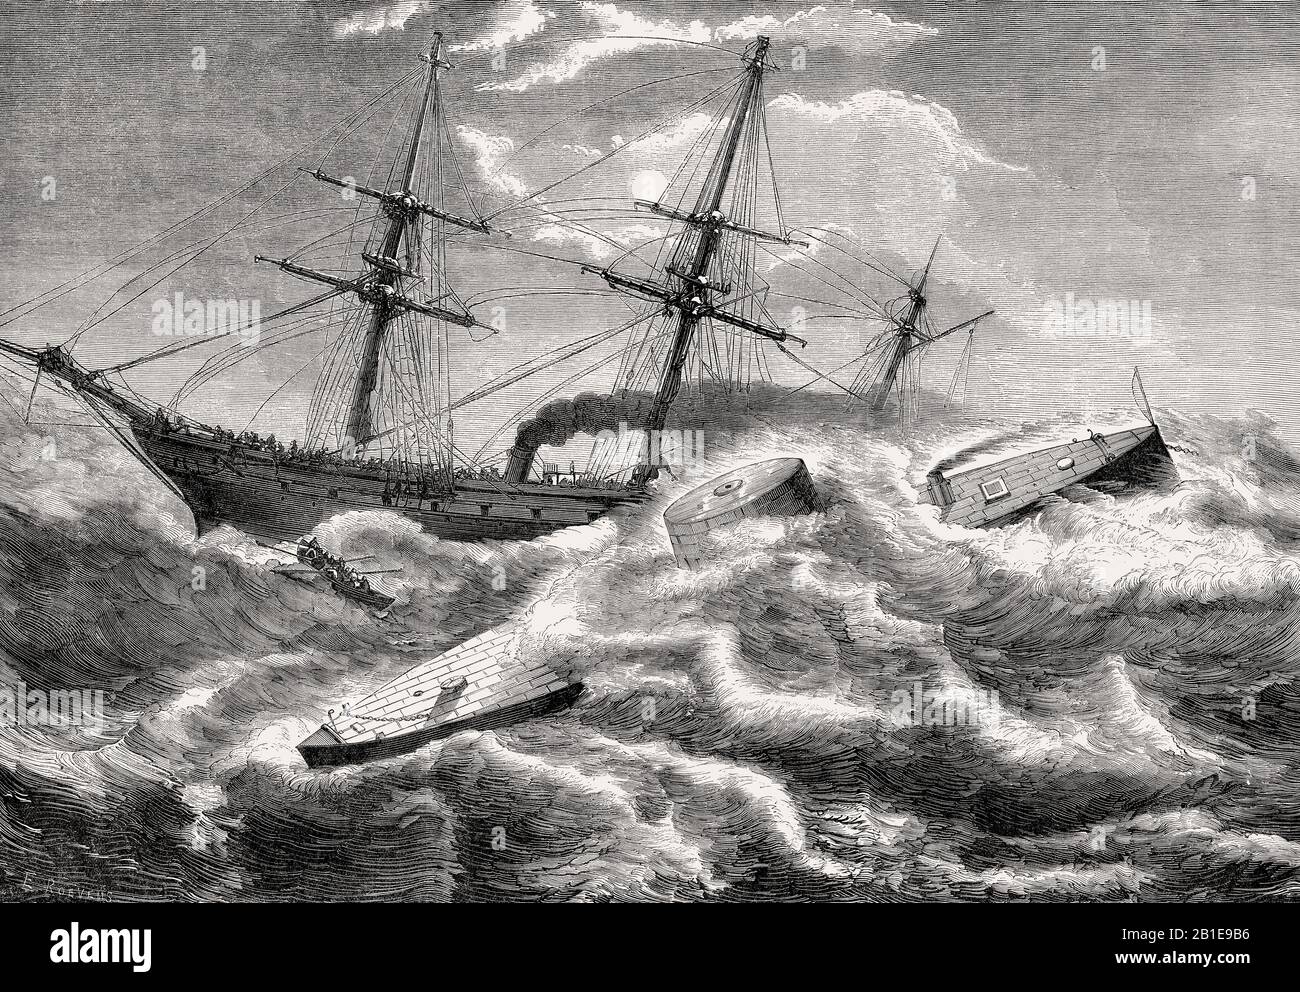 Sinking of the ironclad warship USS Monitor, Battle of Hampton Roads, American Civil War, 1862 Stock Photo